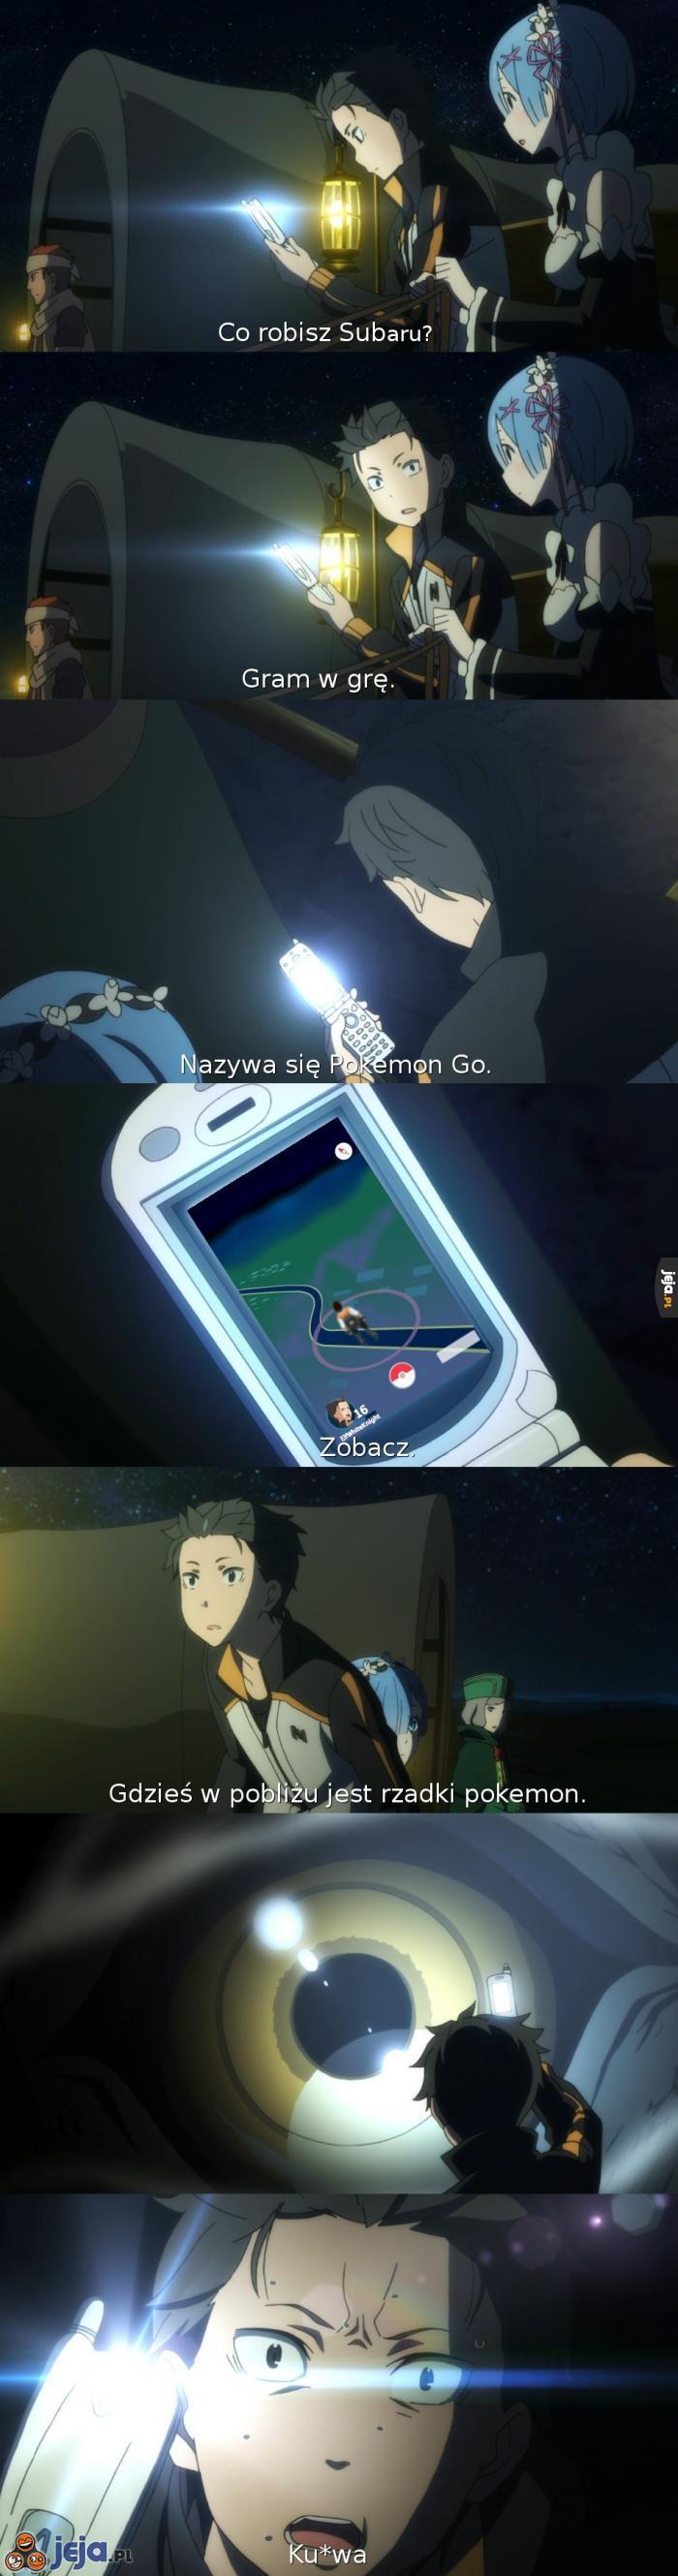 Pokemon Go w anime